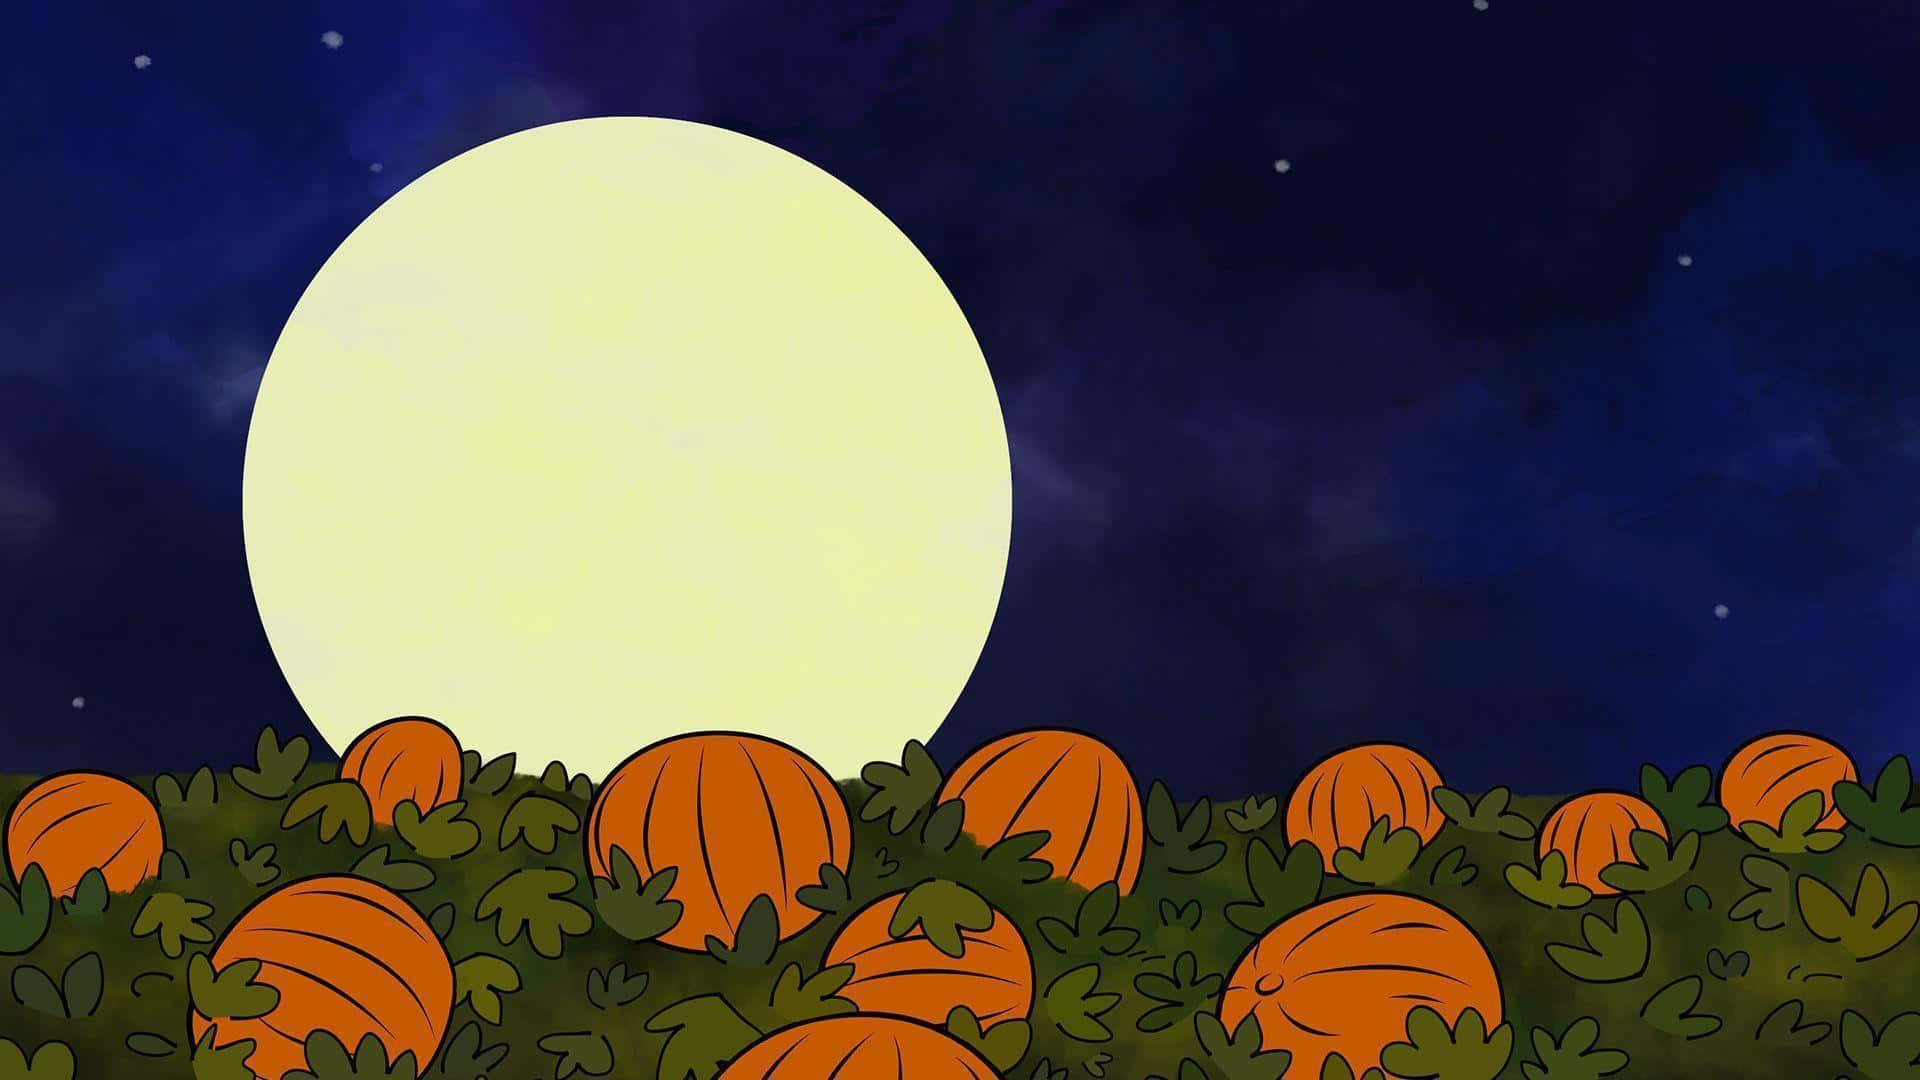 The Great Pumpkin rising on a spooky Halloween night Wallpaper